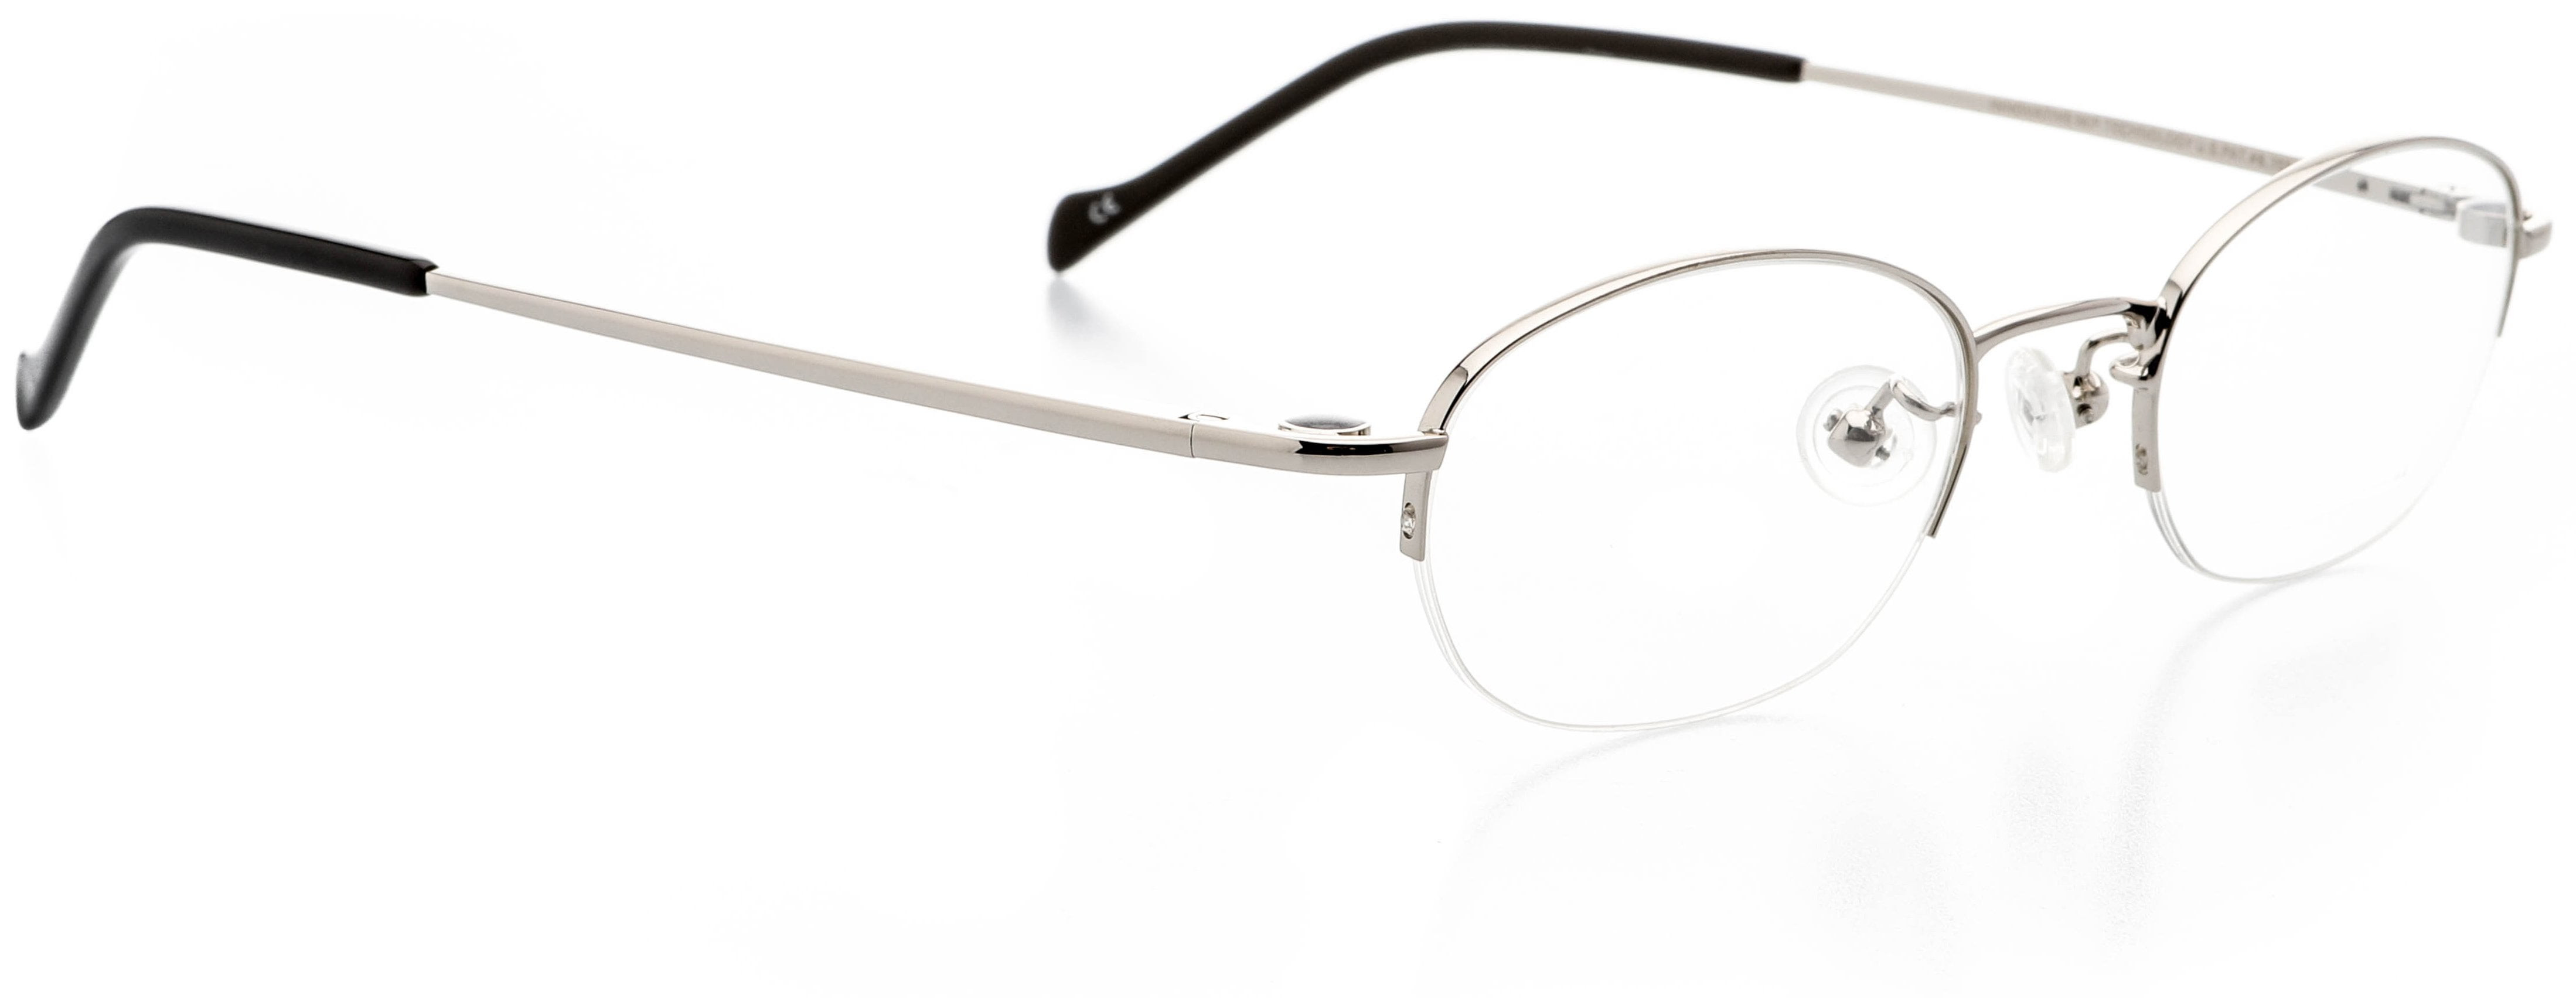 Optical Eyewear - Oval Shape, Metal Half Rim Frame - Prescription